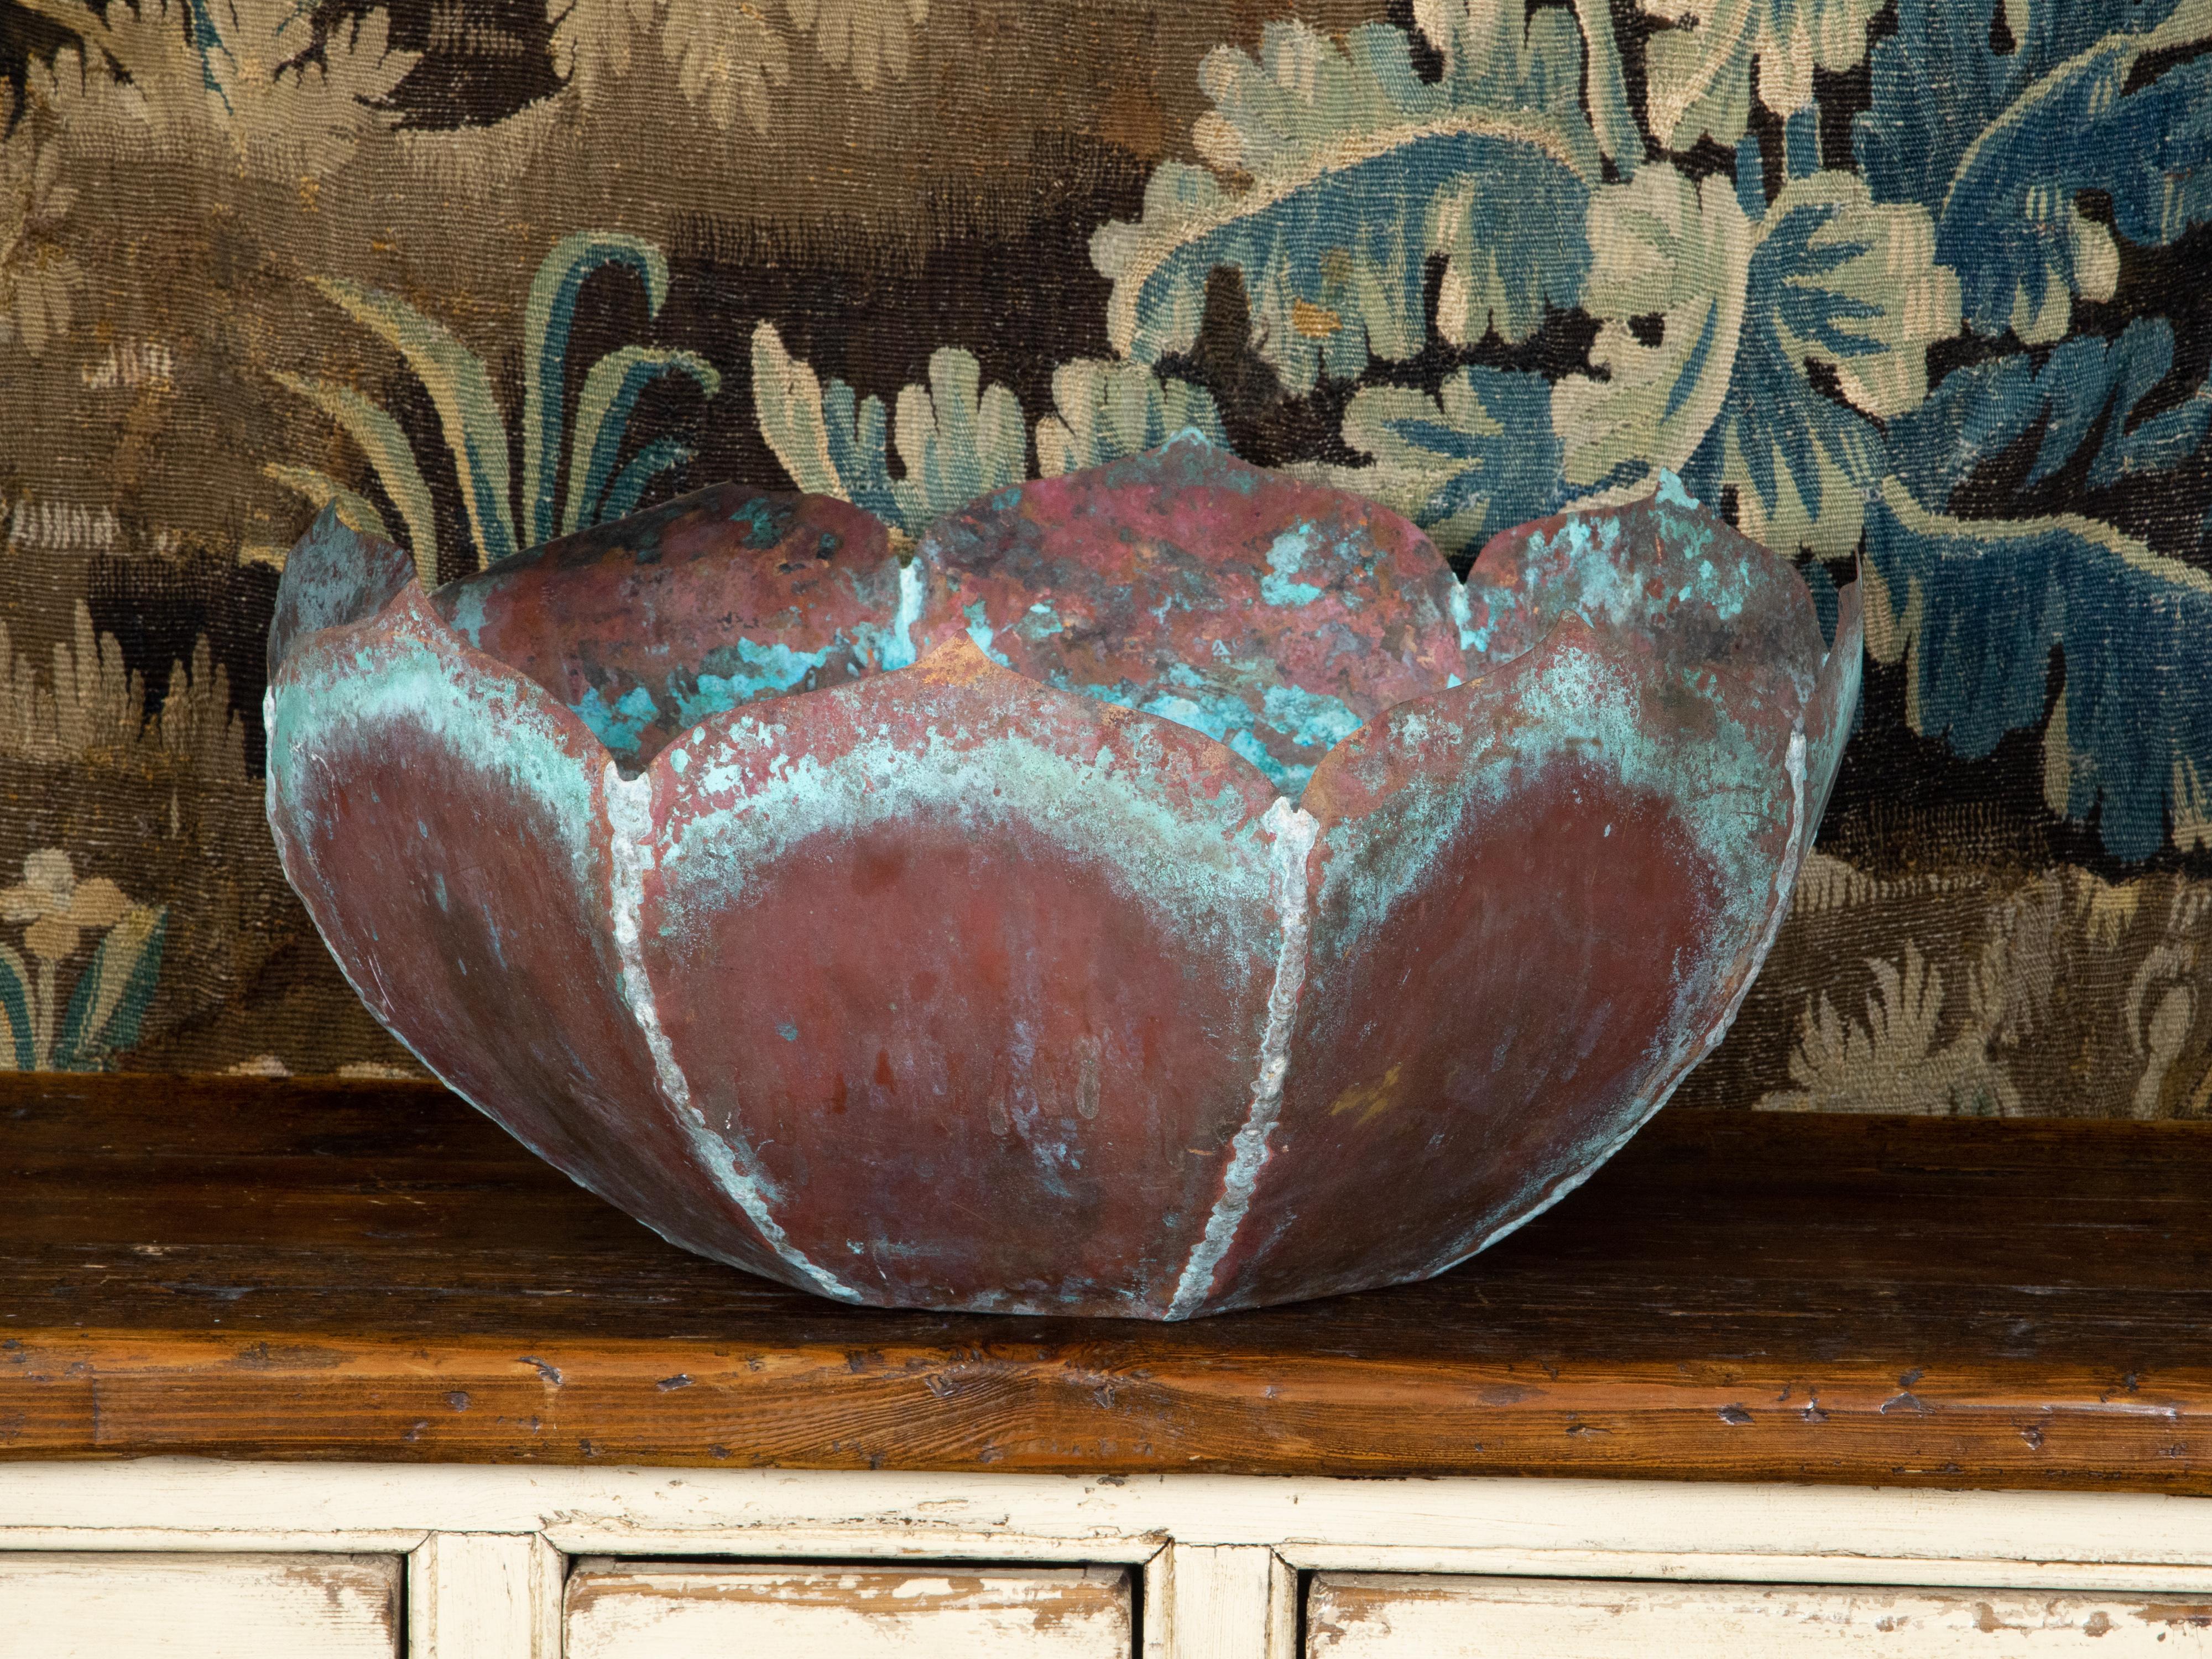 20th Century Midcentury Lotus Flower Shaped Decorative Copper Bowl with Verdigris Patina